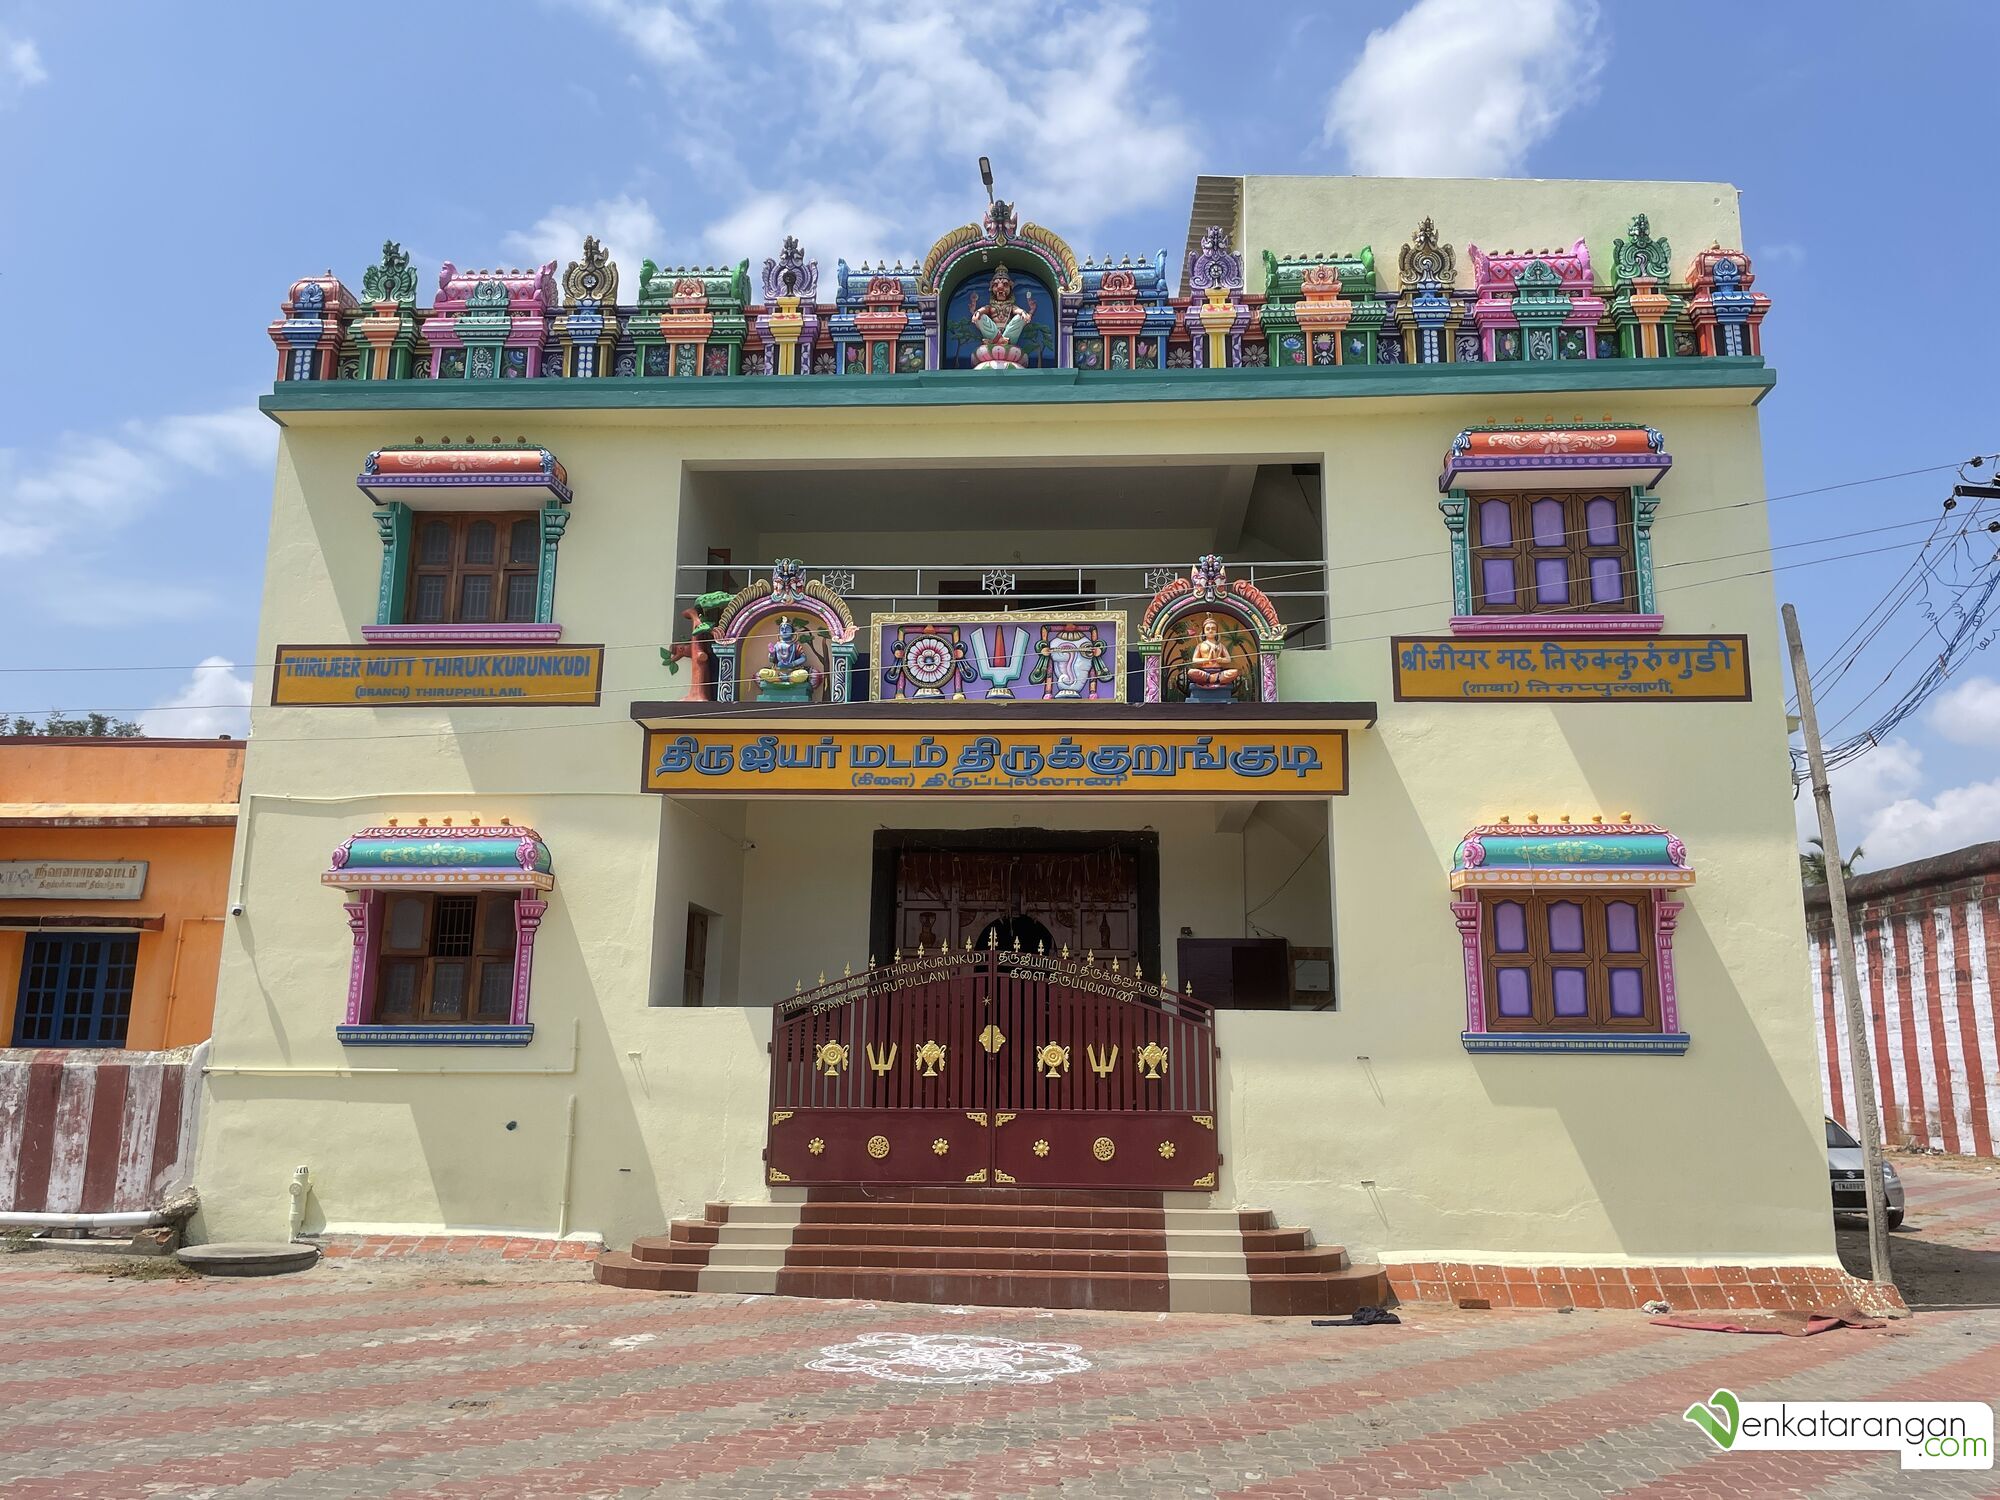 Thirujeer mutt thirukkurunkudi's ashram in front of the Thiruppullani Temple  [திரு ஜீயர் மடம் திருக்குறுங்குடி, திருப்புல்லாணி]